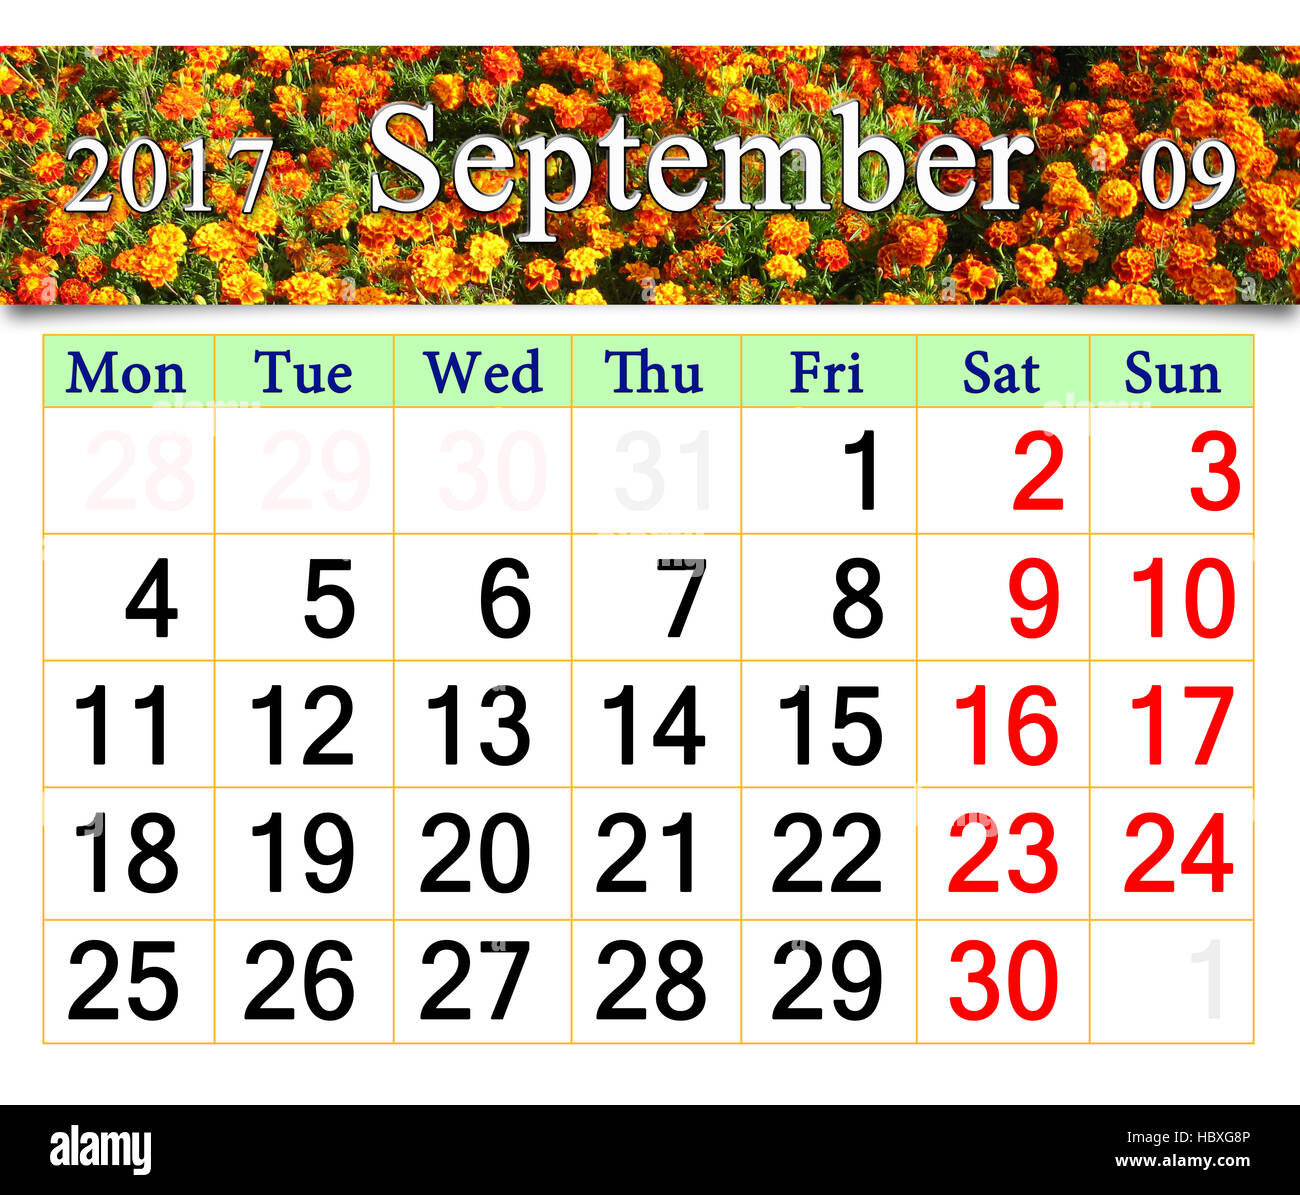 calendar-for-september-2017-with-marigolds-stock-photo-alamy